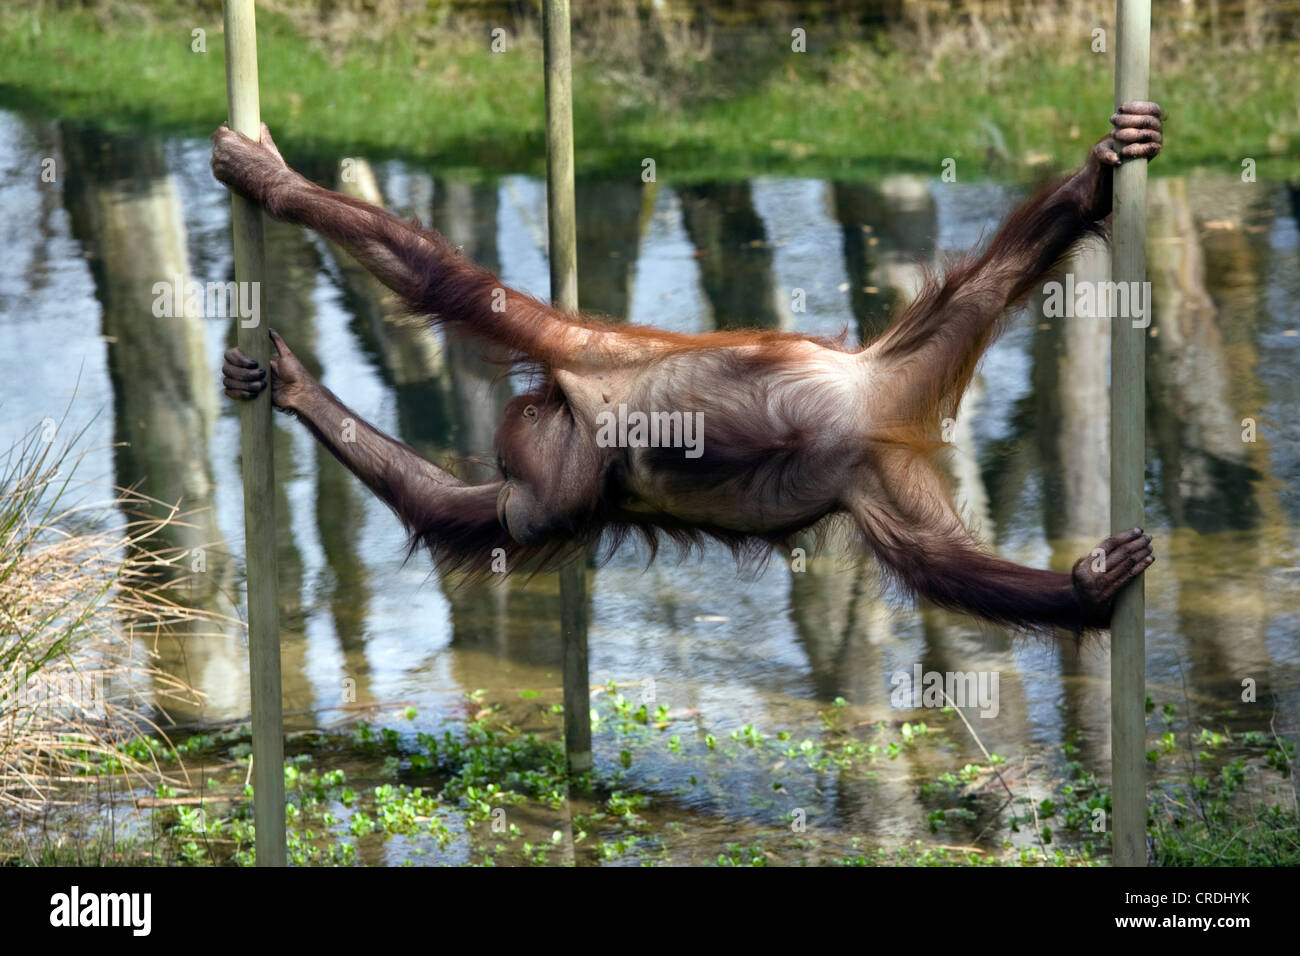 Bornean orangutan (Pongo pygmaeus pygmaeus), climbing at monkey bars, Netherlands, Apenheul, Apeldorn Stock Photo